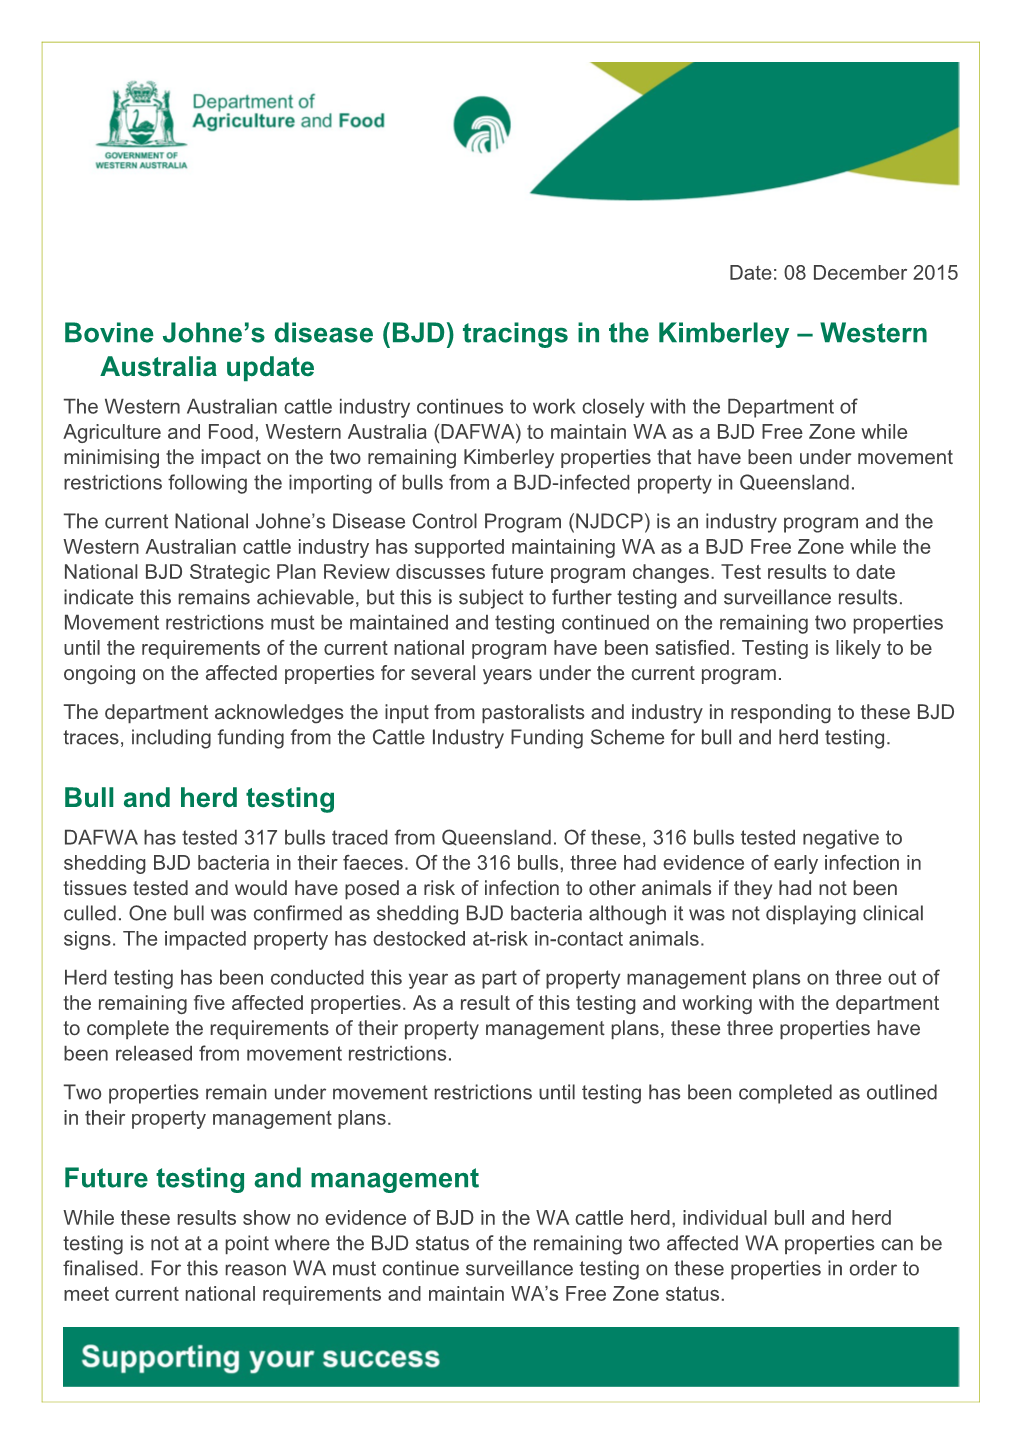 Bovine Johne S Disease (BJD) Tracings in the Kimberley Western Australia Update